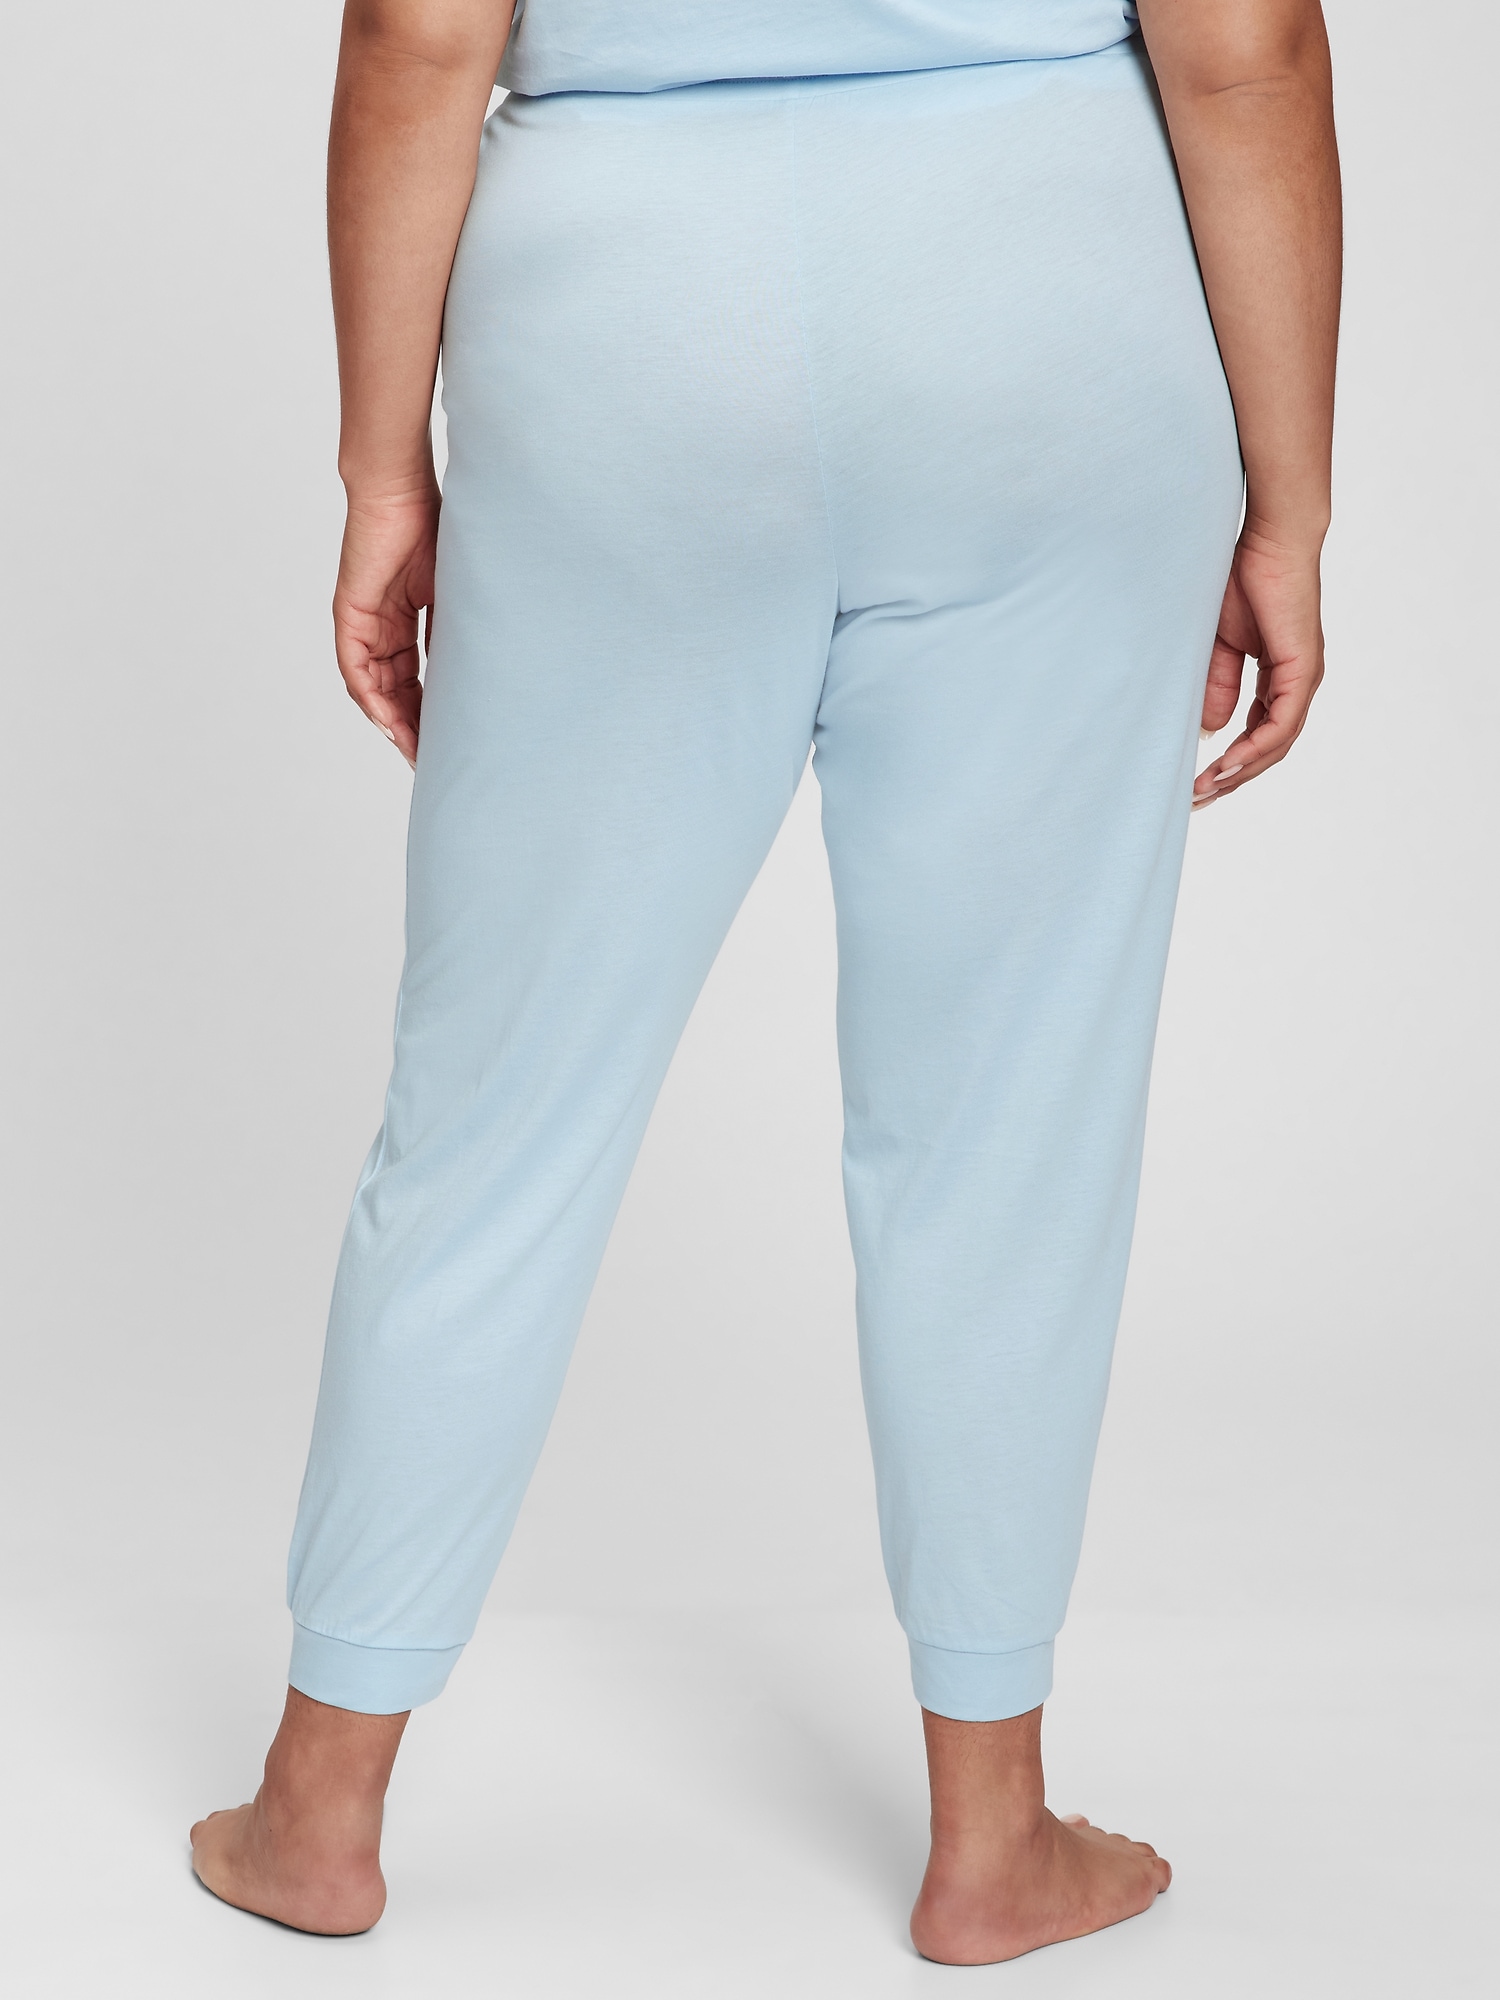 women cotton jogger pants plus size 2xl-6xl new stock available malaysia